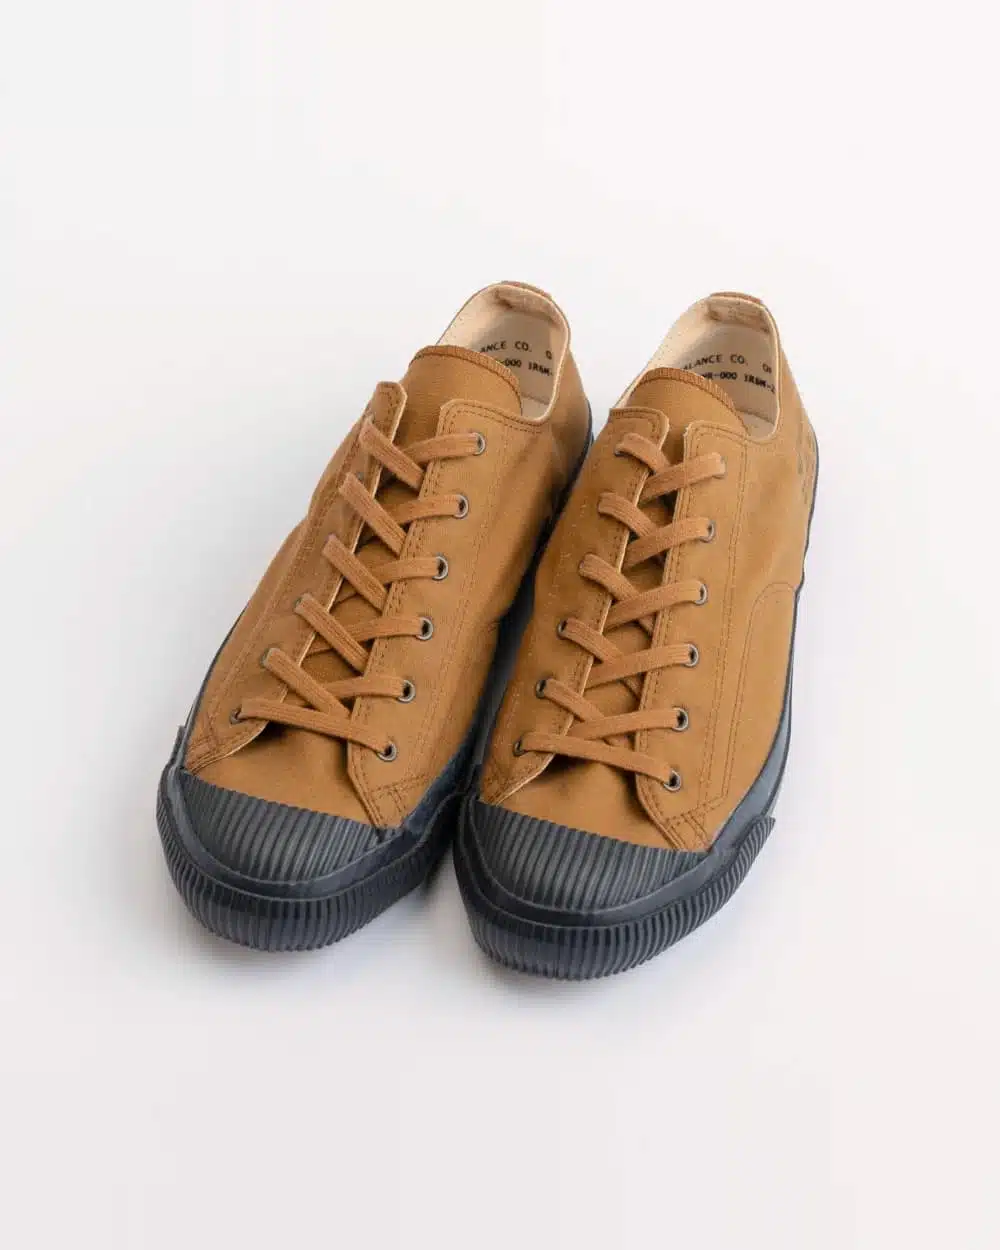 PRAS Shellcap Low Sneakers - Brown /Black